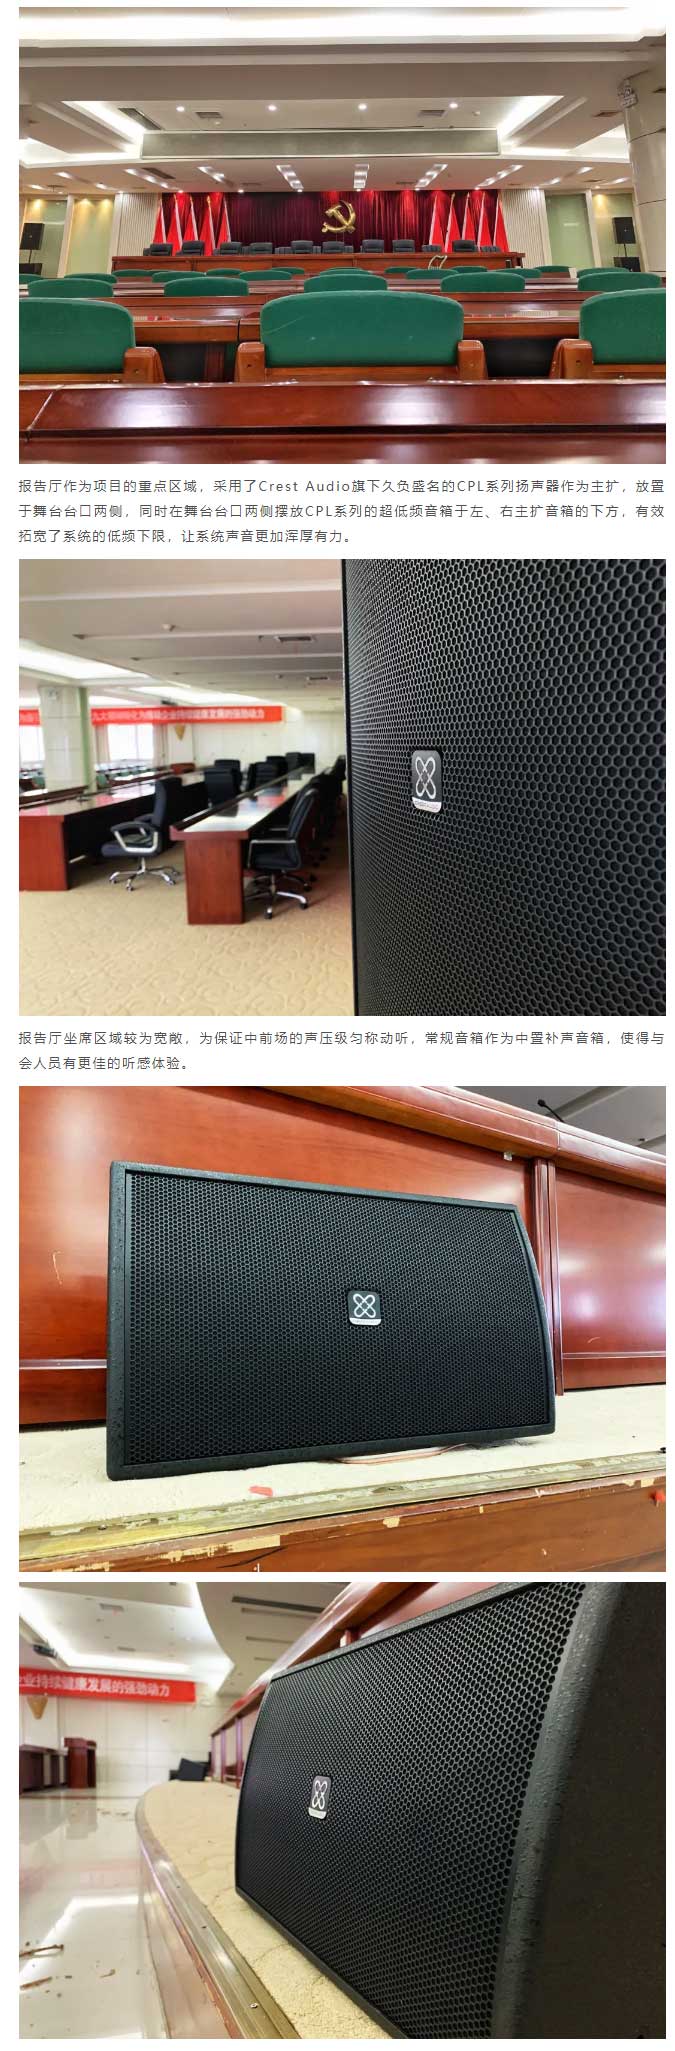 CREST-AUDIO专业会议扩声系统应用于湖北武汉烟草公司_02.jpg